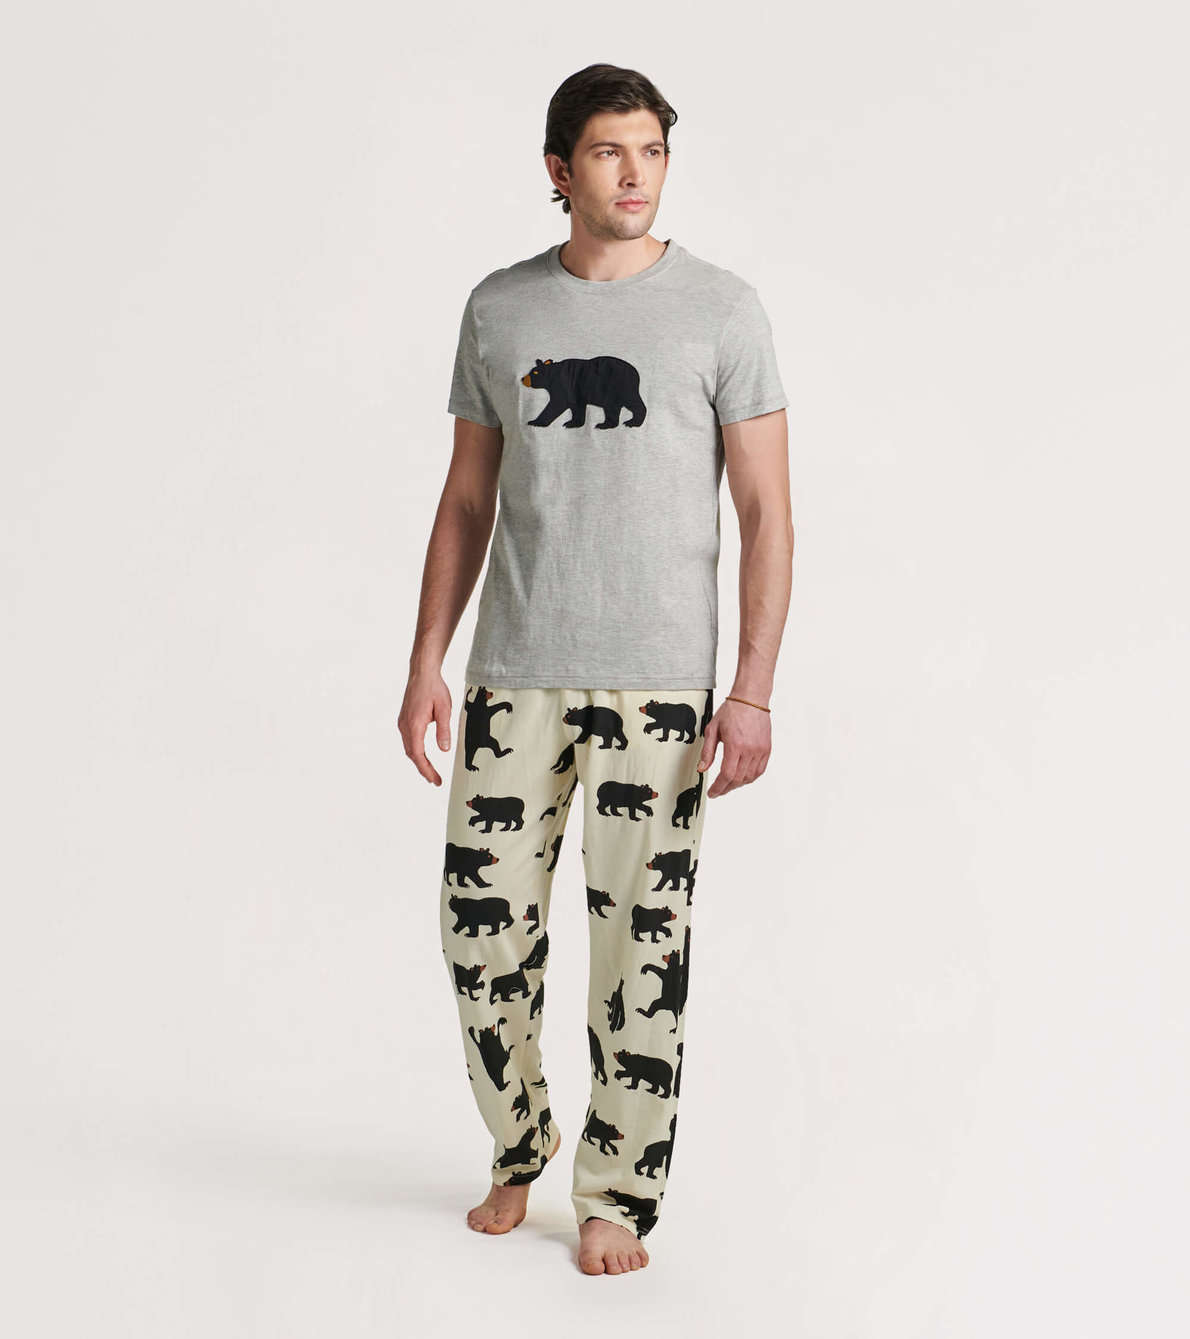 View larger image of Bears Men's Tee and Pants Pajama Separates